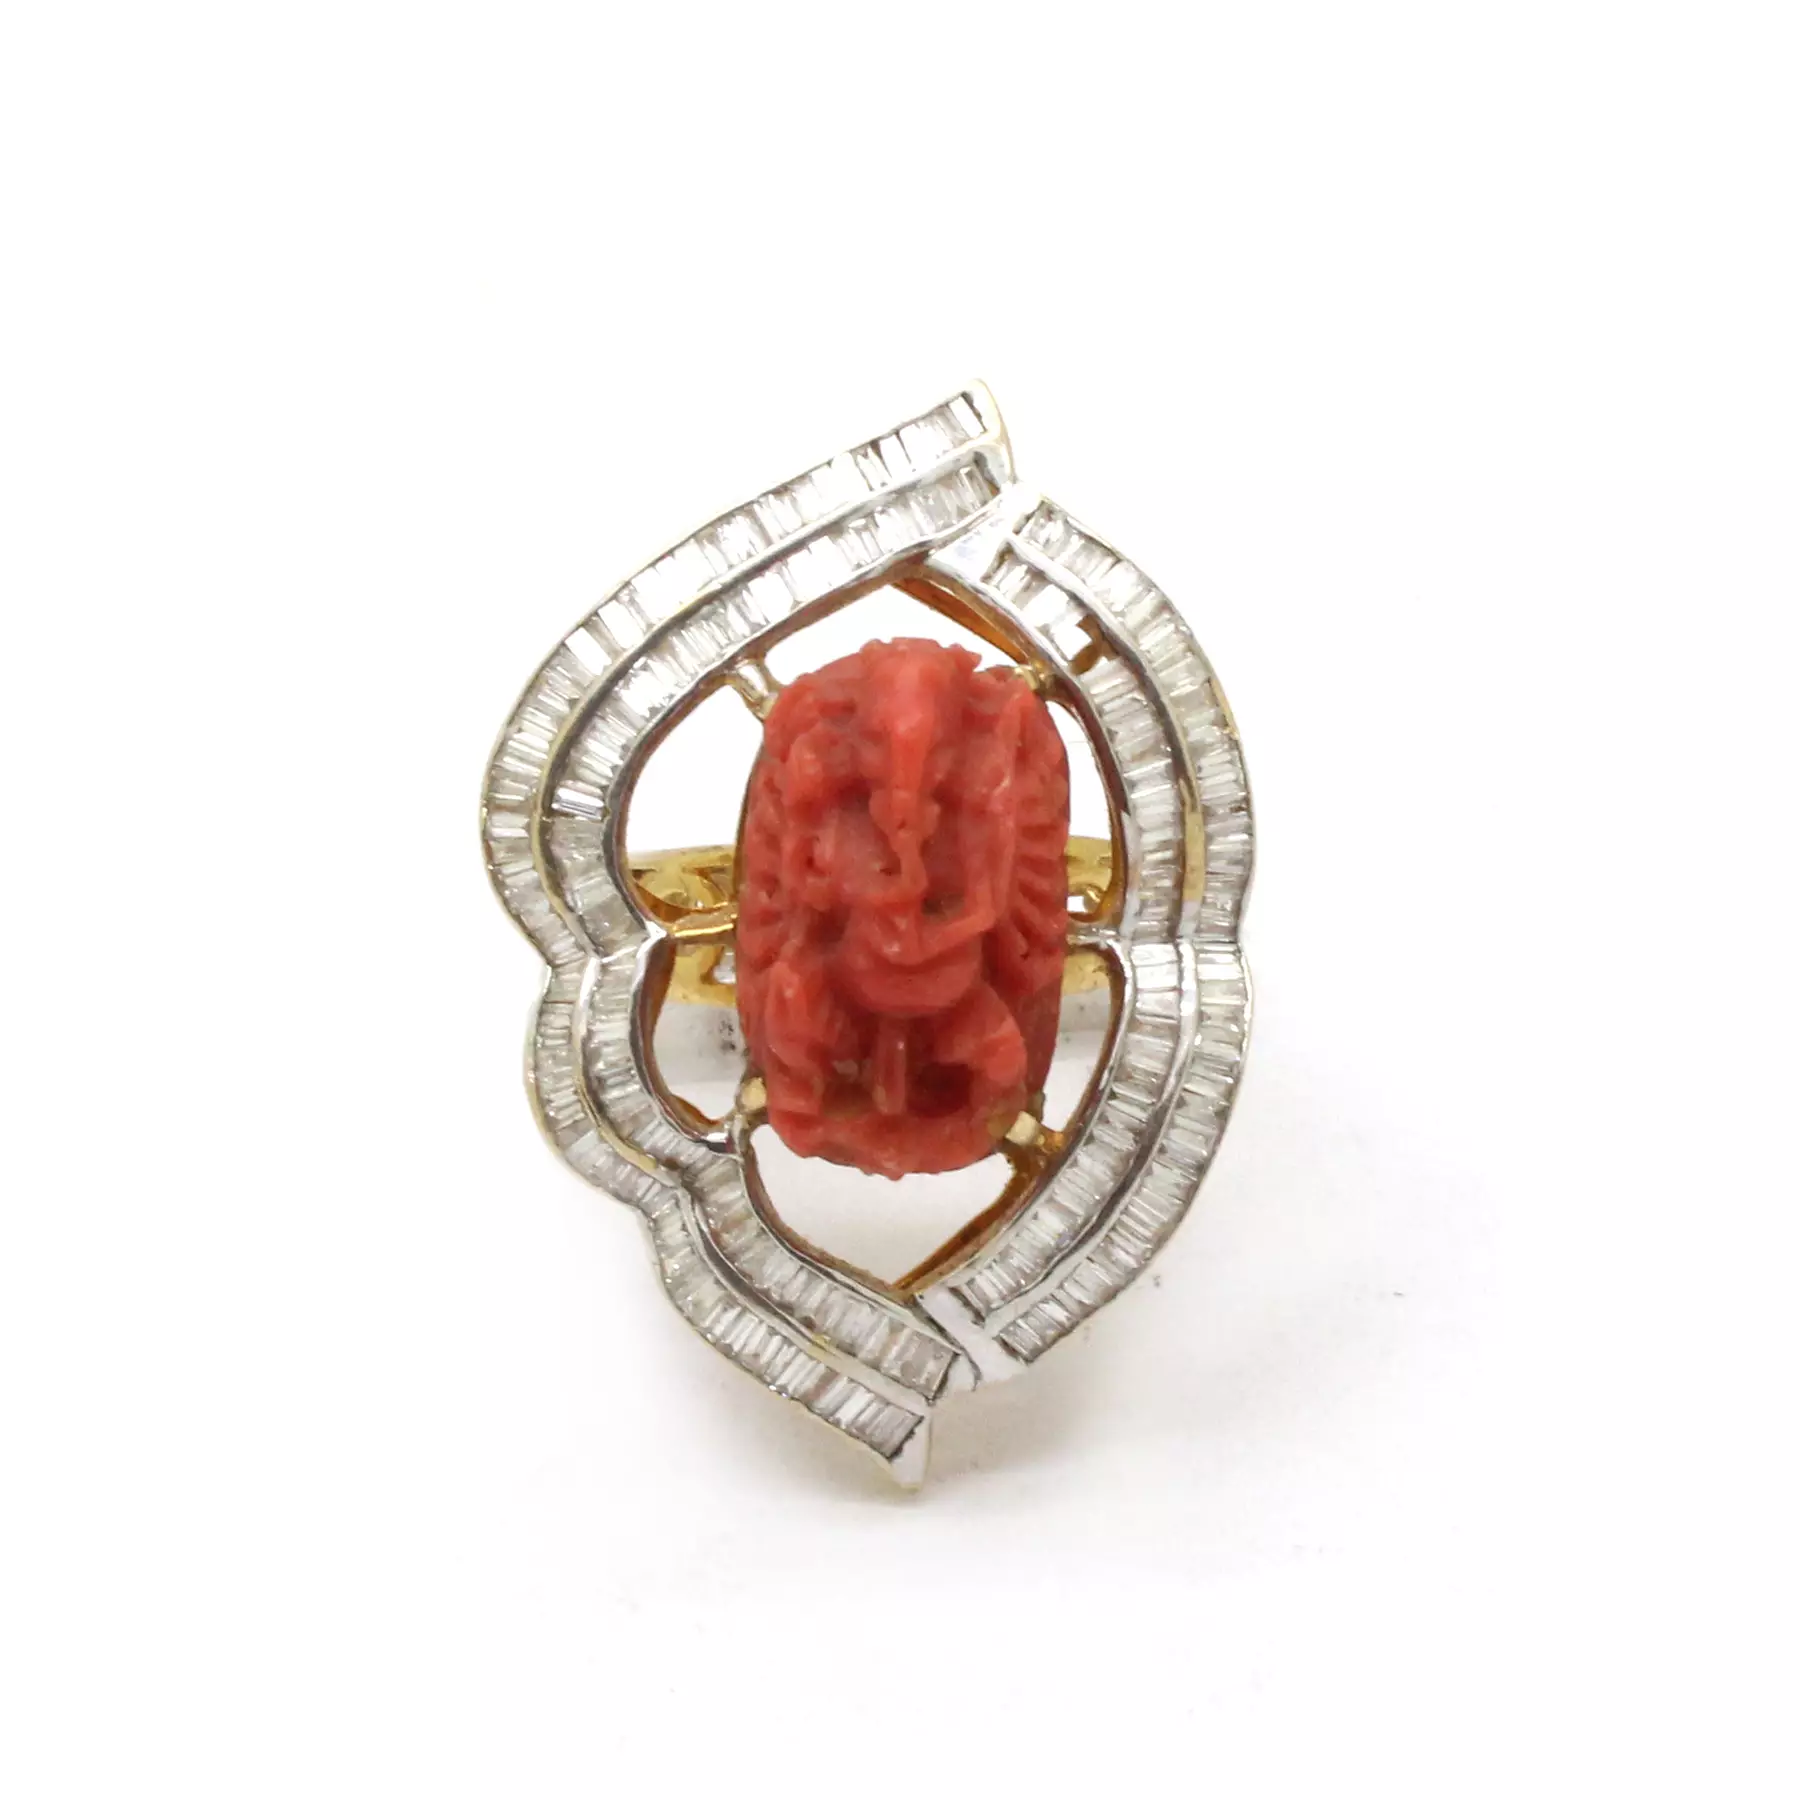 Buy Ganesha Face Design Ladies Ring 31 | Ganesha Face Design Ladies Ring 31  Price, Benefits, Colours - Dhaiv.com